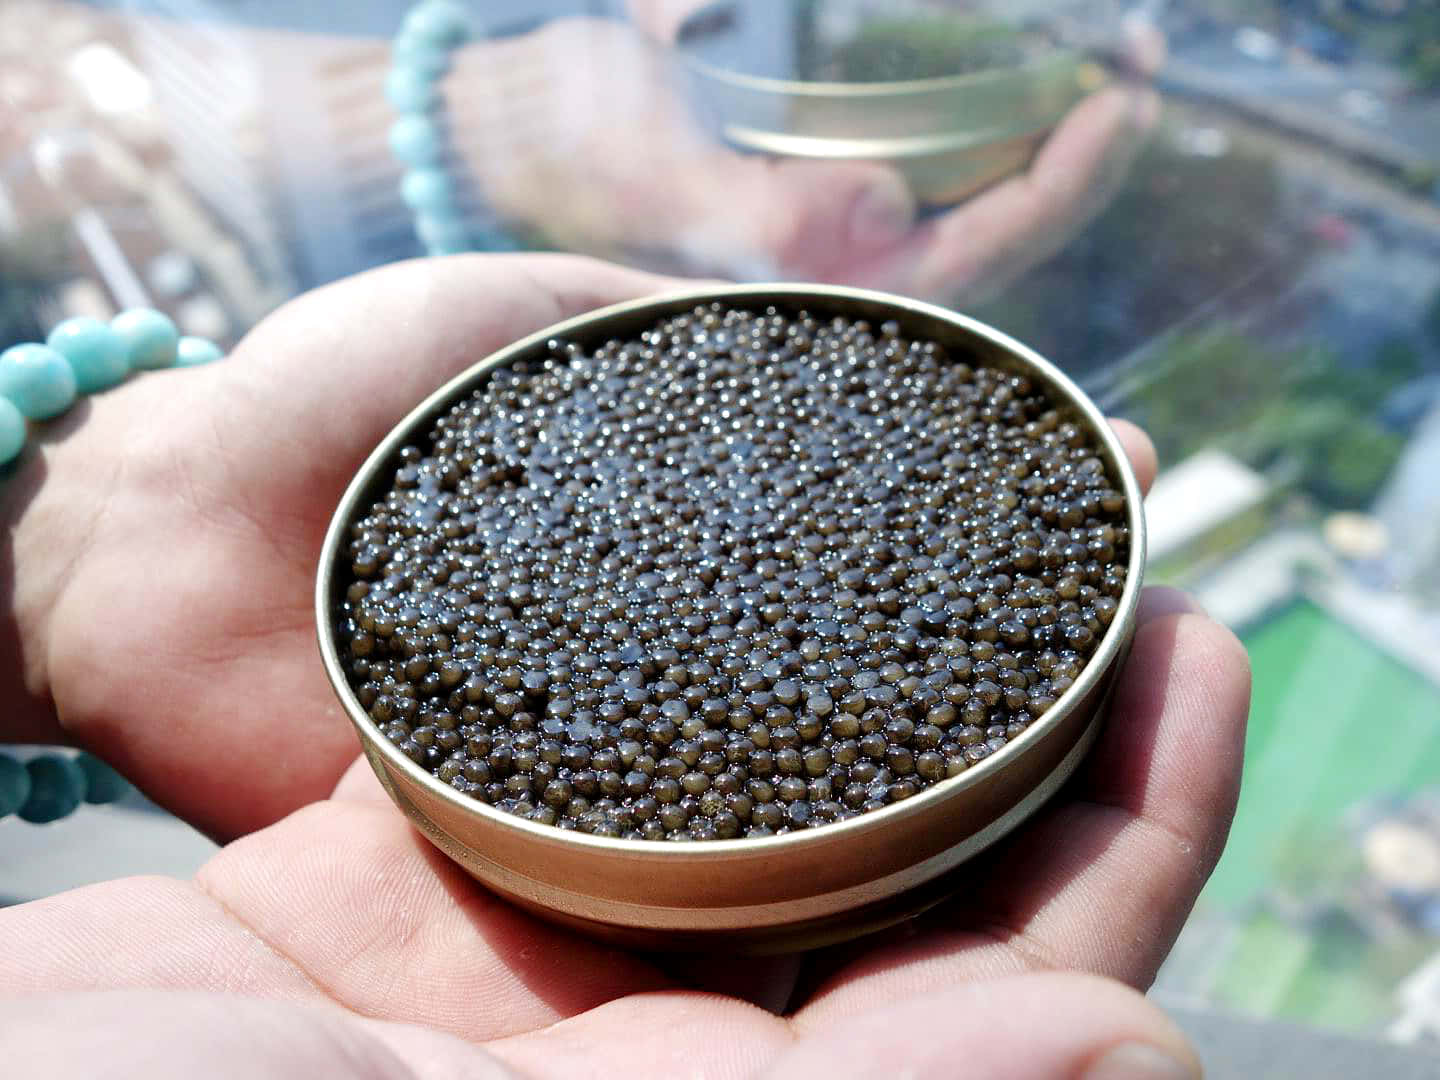 A black Caviar jumps up as far as it can. Wallpaper